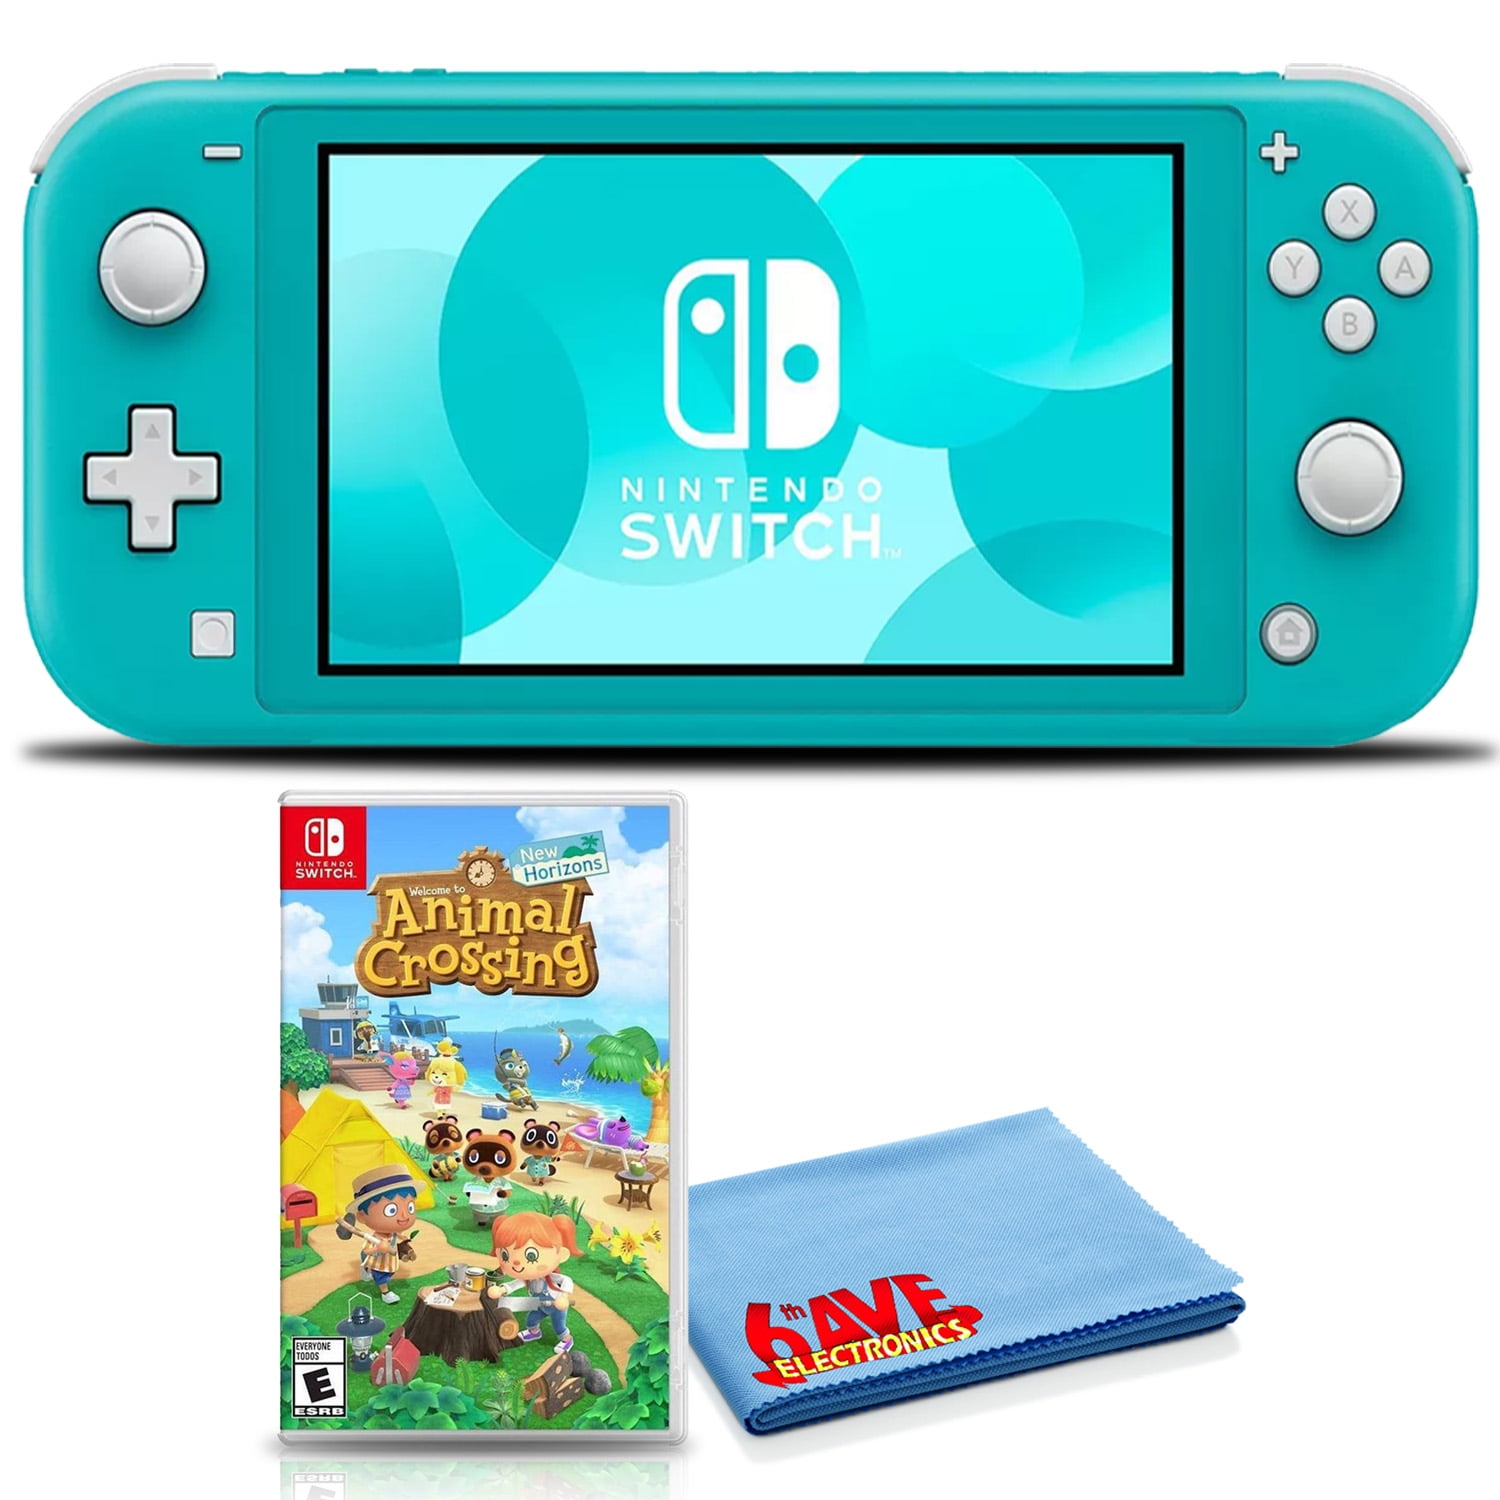 Nintendo Switch Lite (Gray) Bundle with Animal Crossing + Fiber 